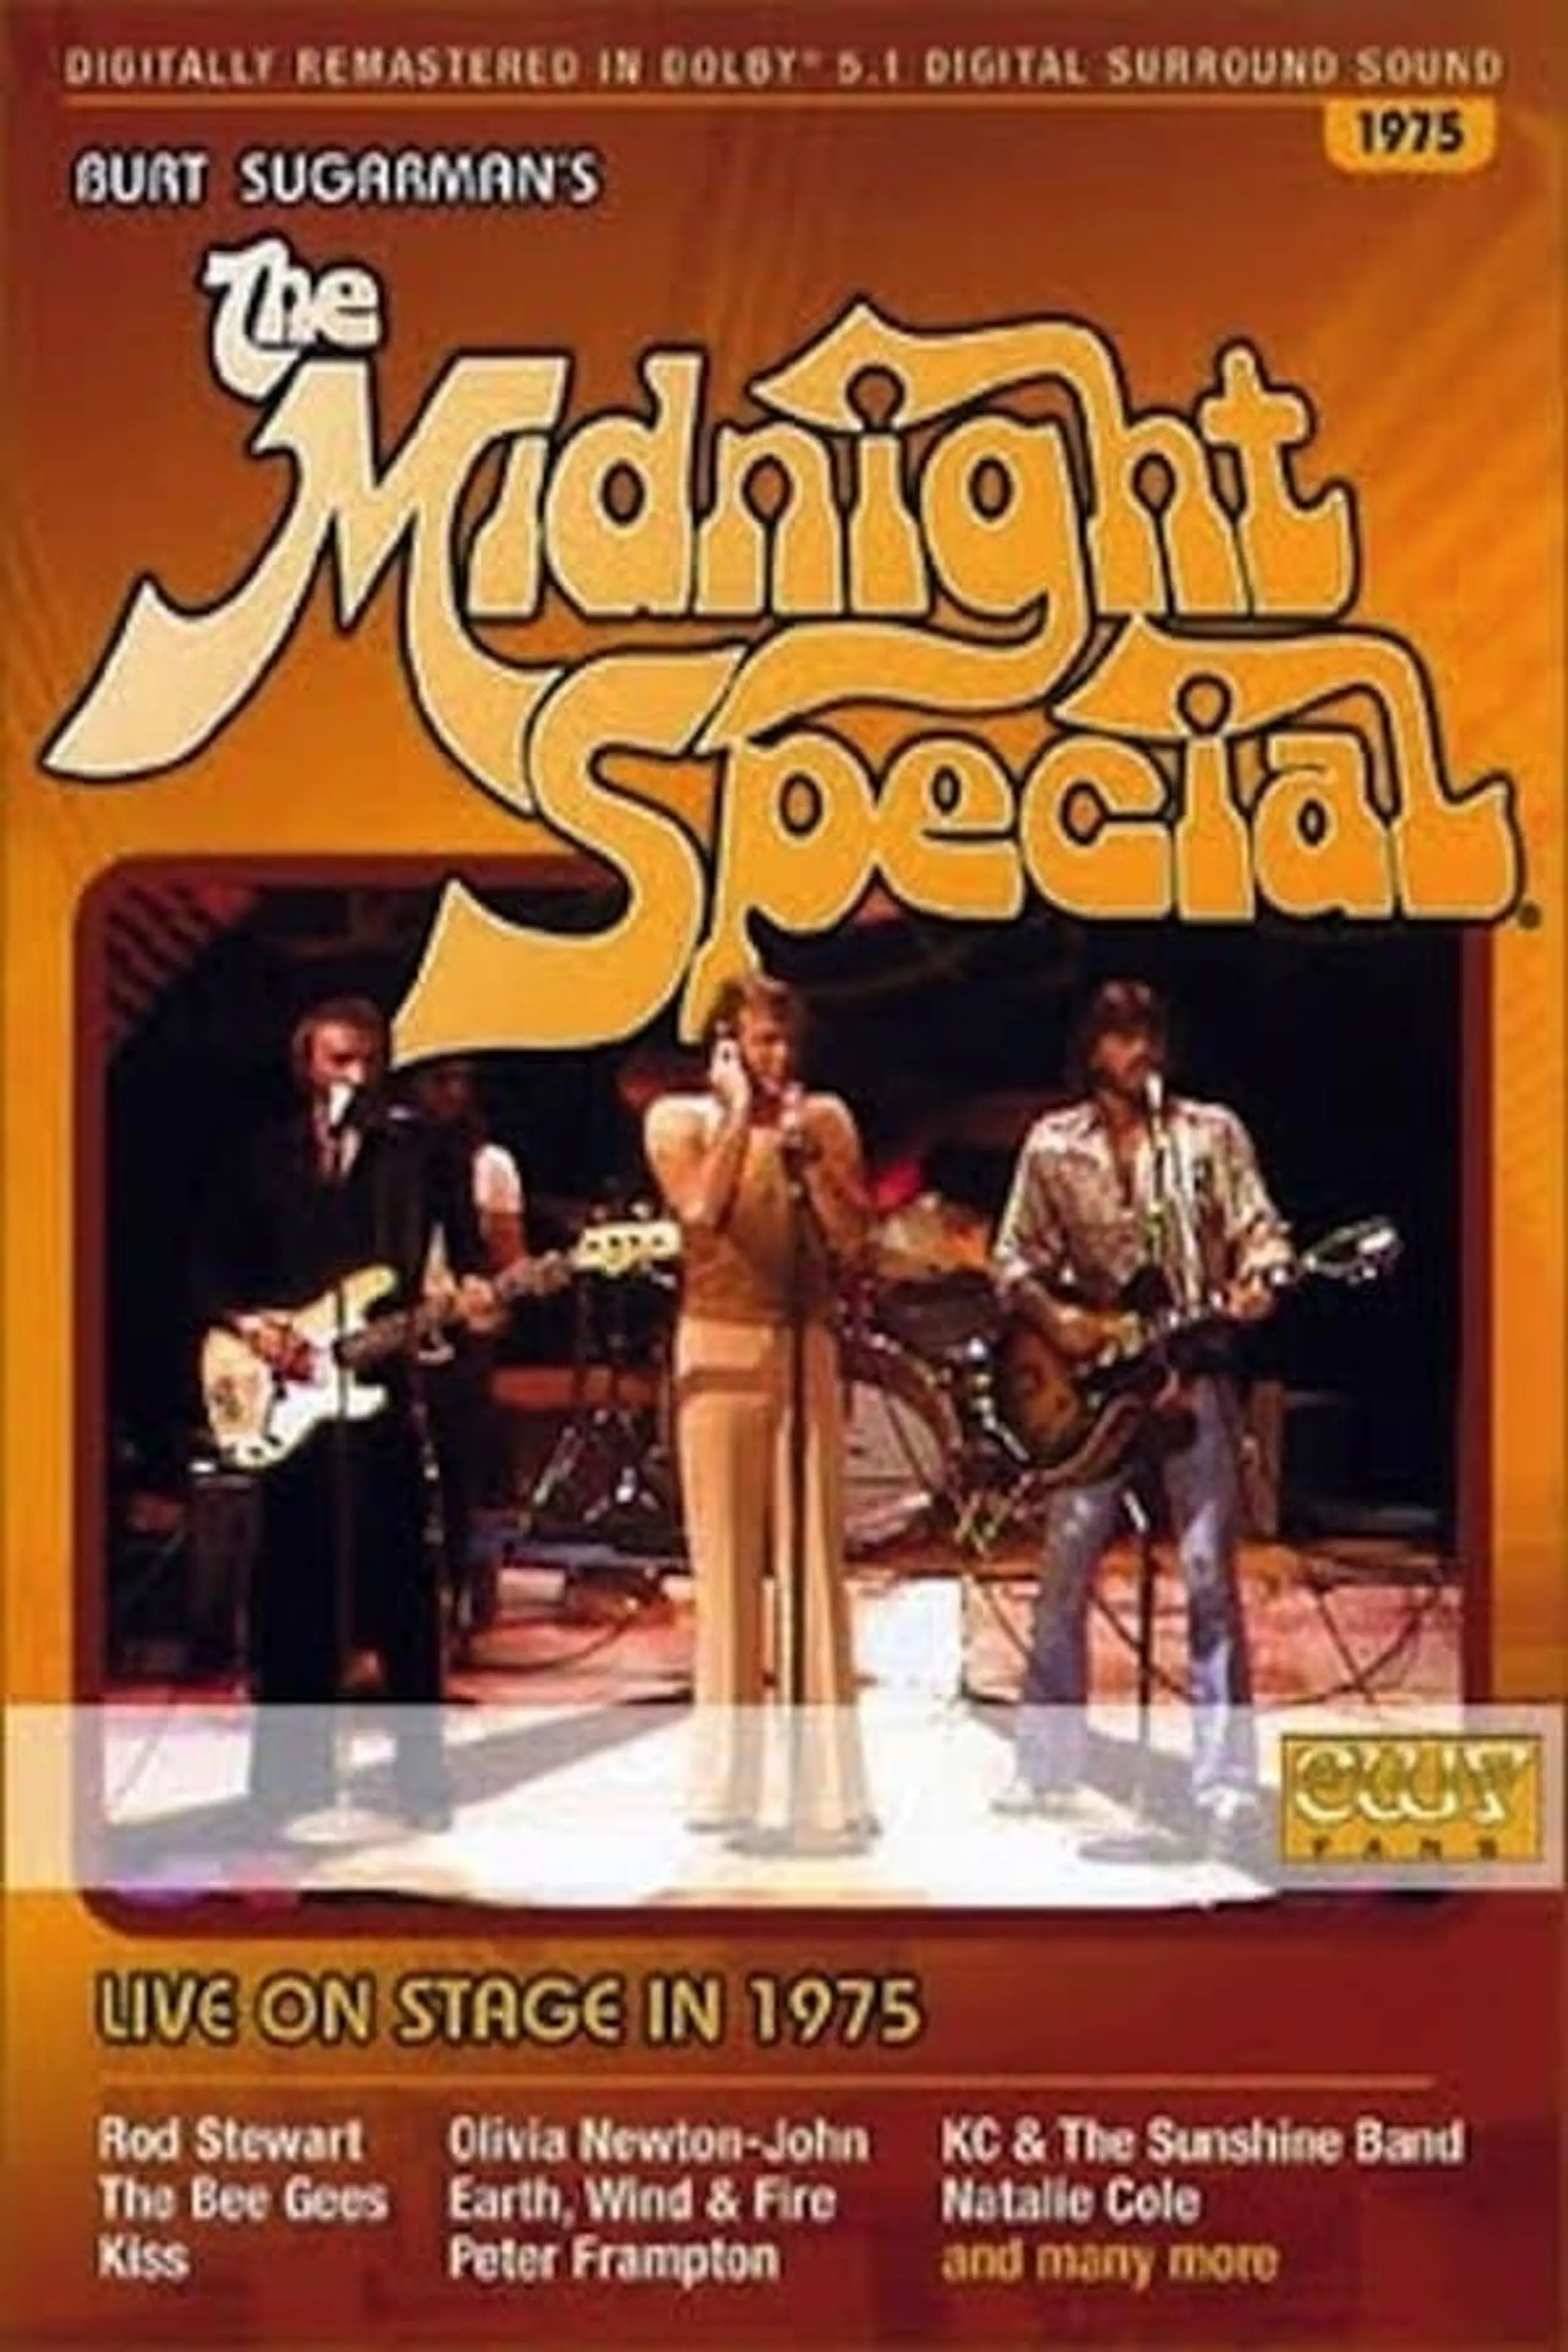 Kiss [1975] Midnight Special